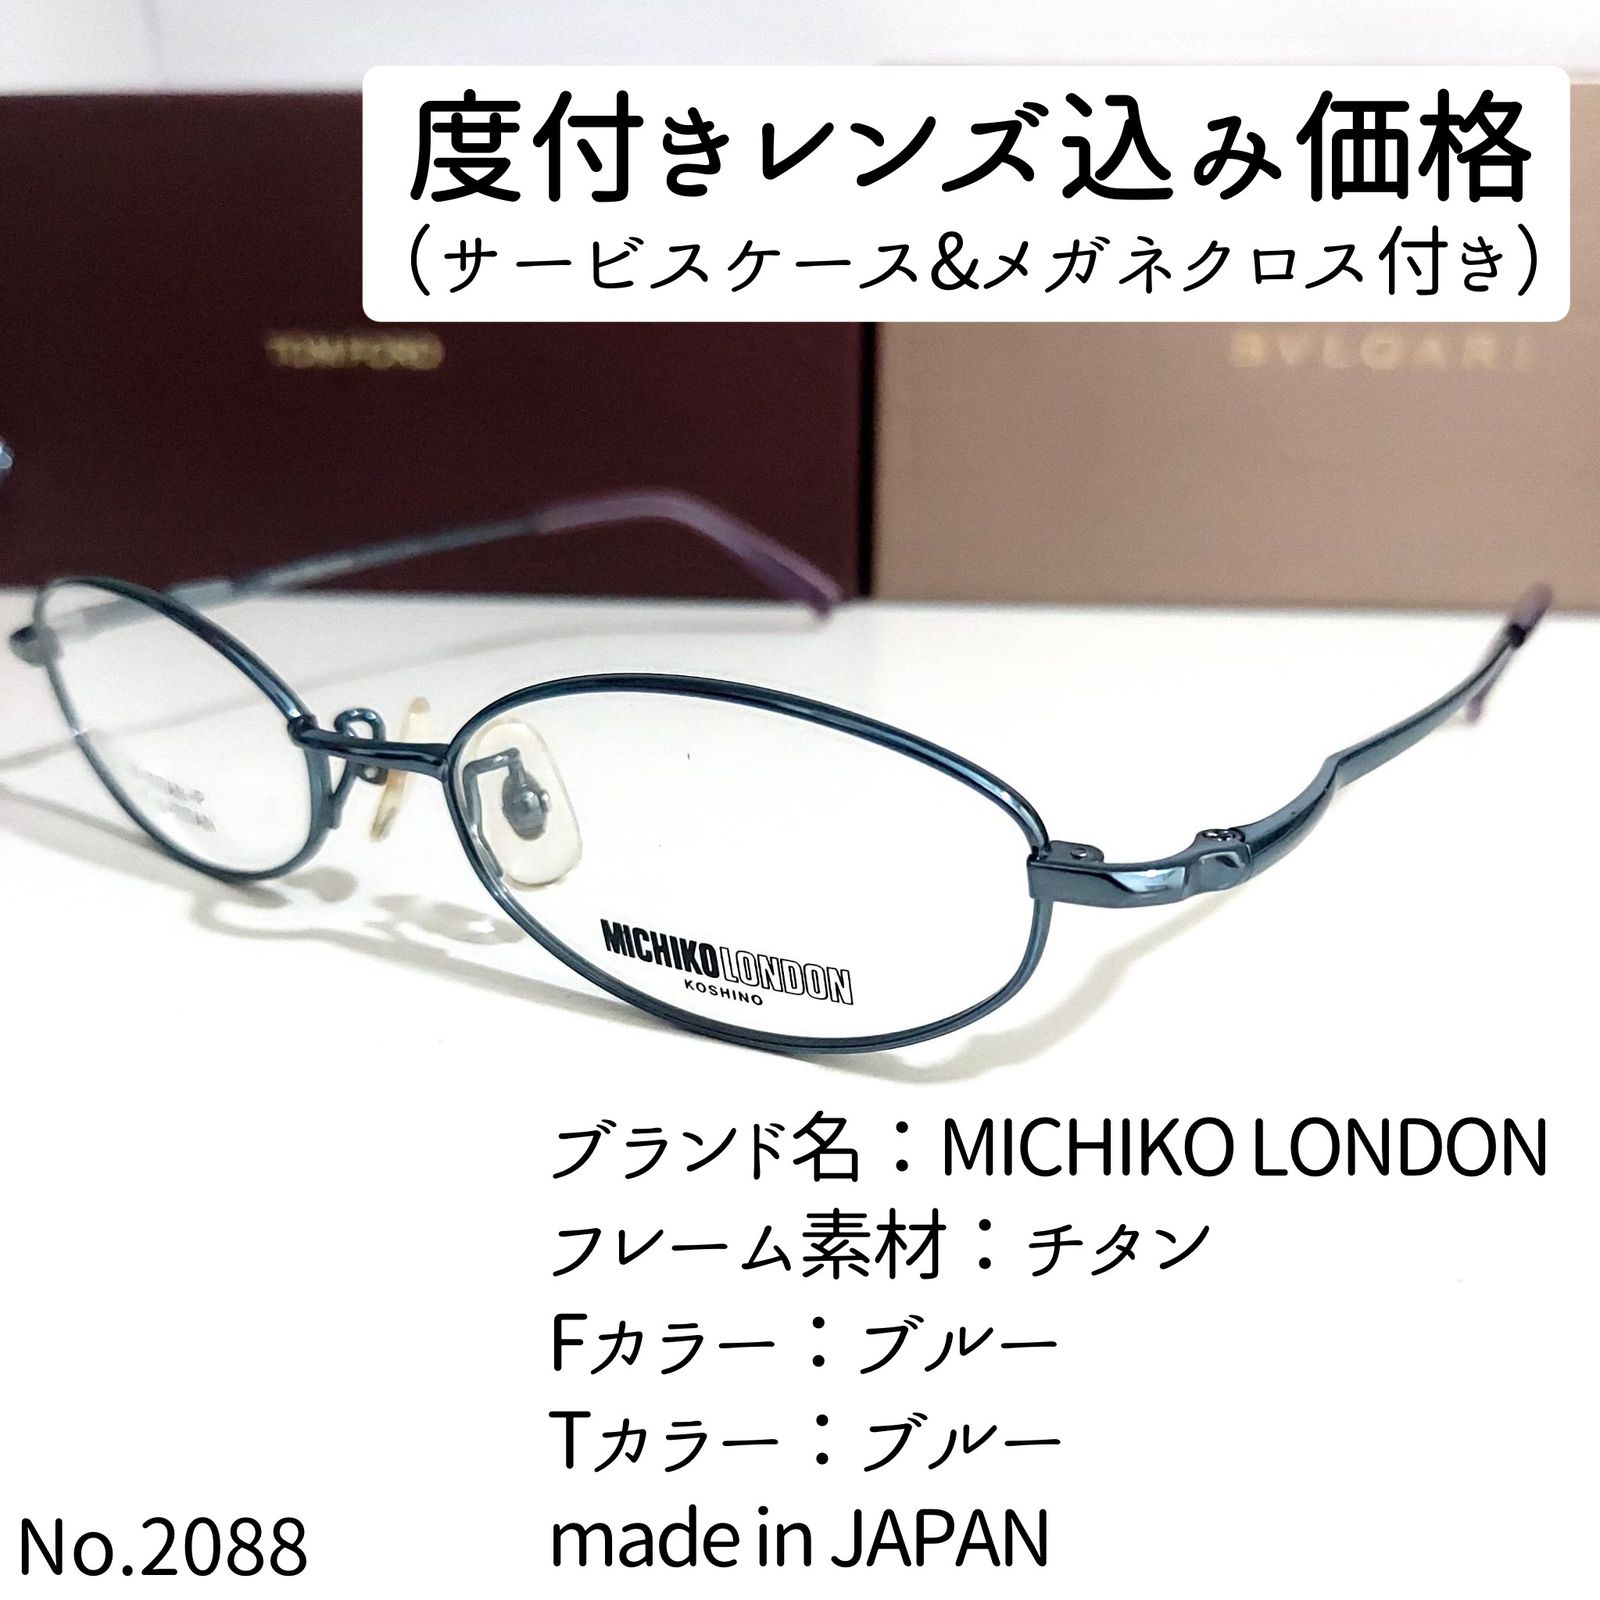 No.2088メガネ MICHIKO LONDON【度数入り込み価格】-